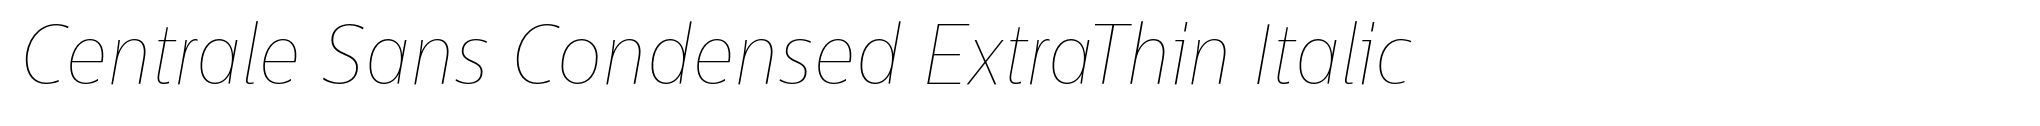 Centrale Sans Condensed ExtraThin Italic image